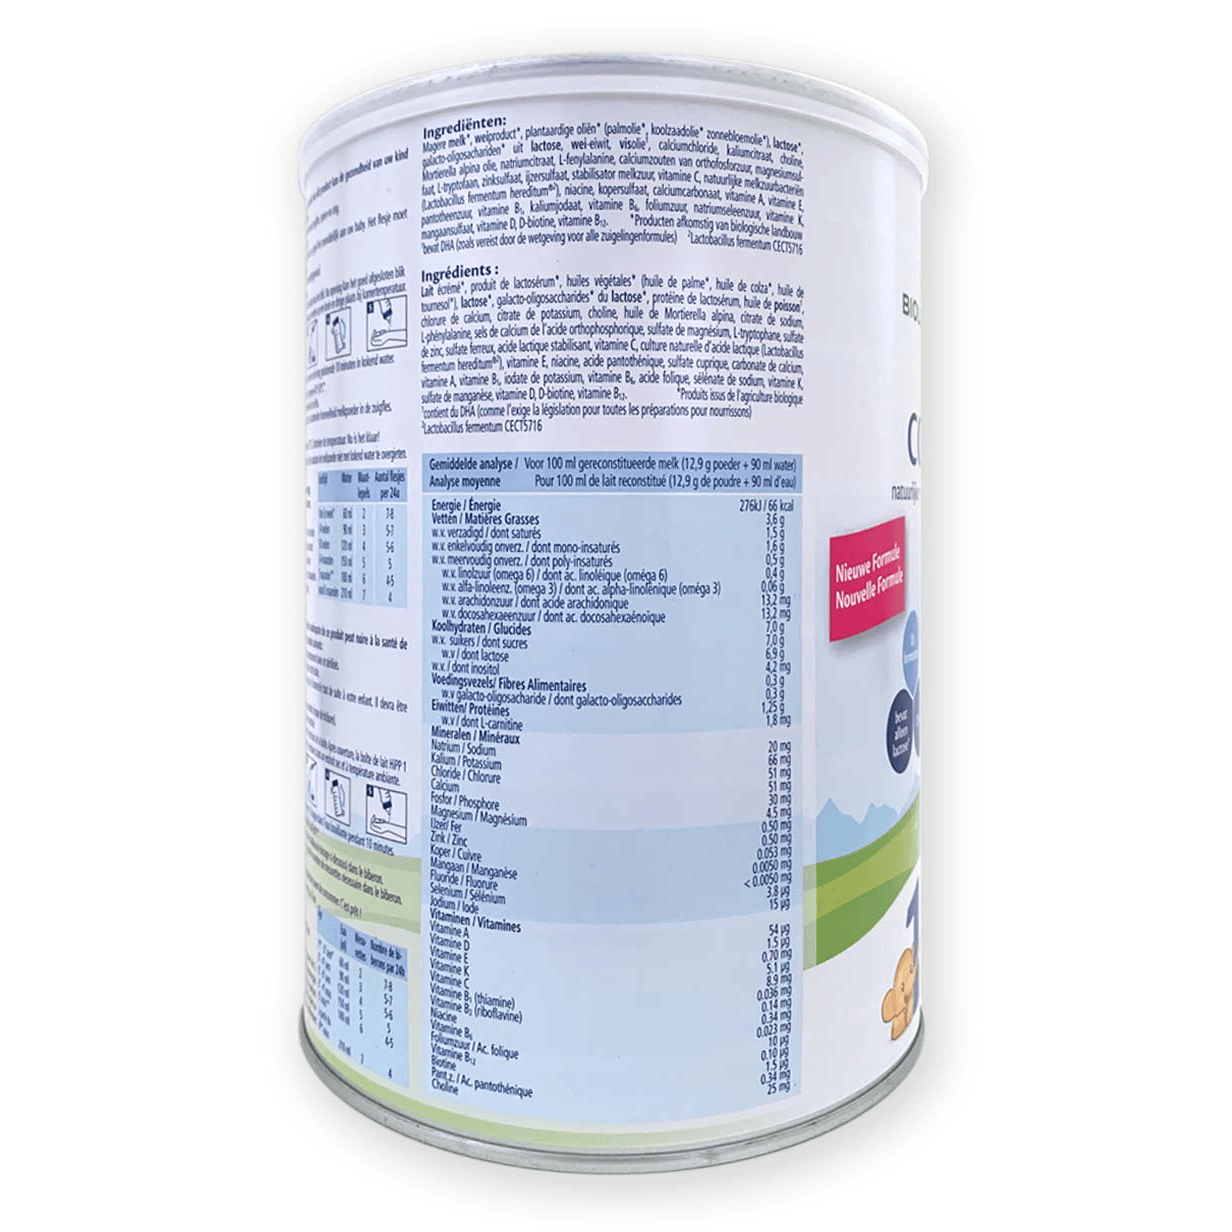 HiPP Dutch Stage 1 Combiotik Infant Milk Formula 0-6 months • 800g - Emmbaby Canada